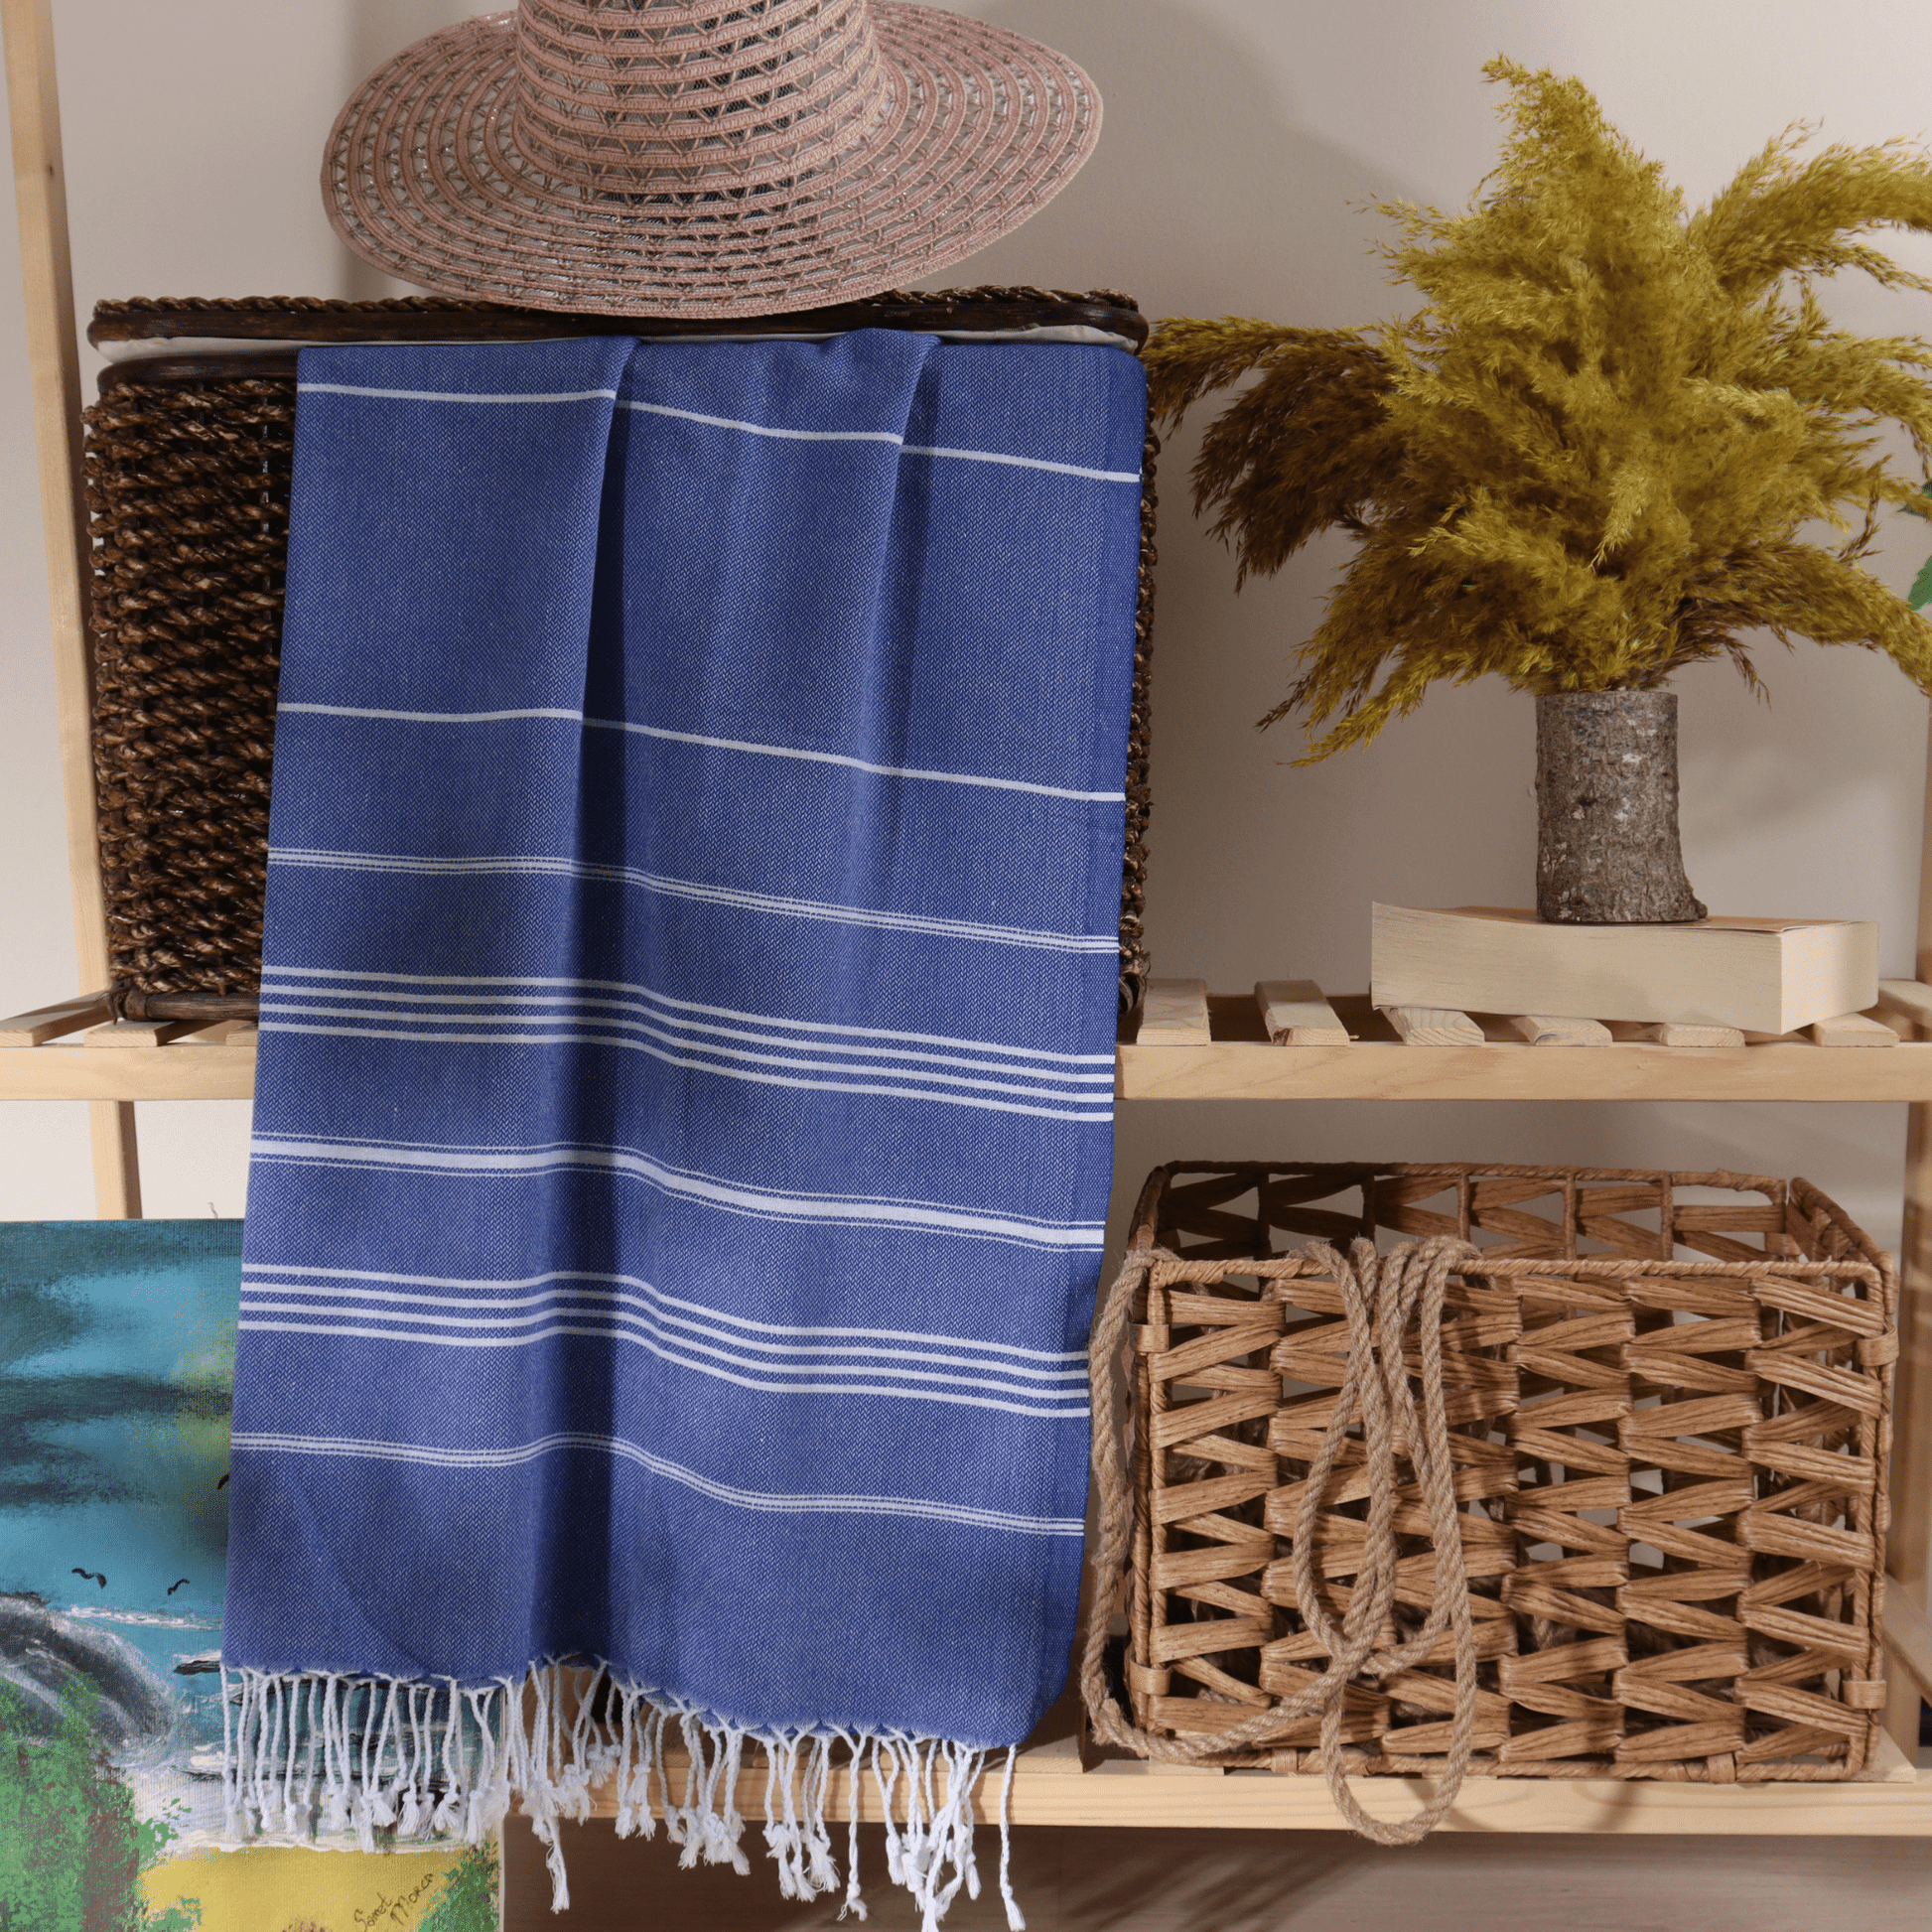 Perfect Classic - Turkish Bath & Beach Towel - Grey